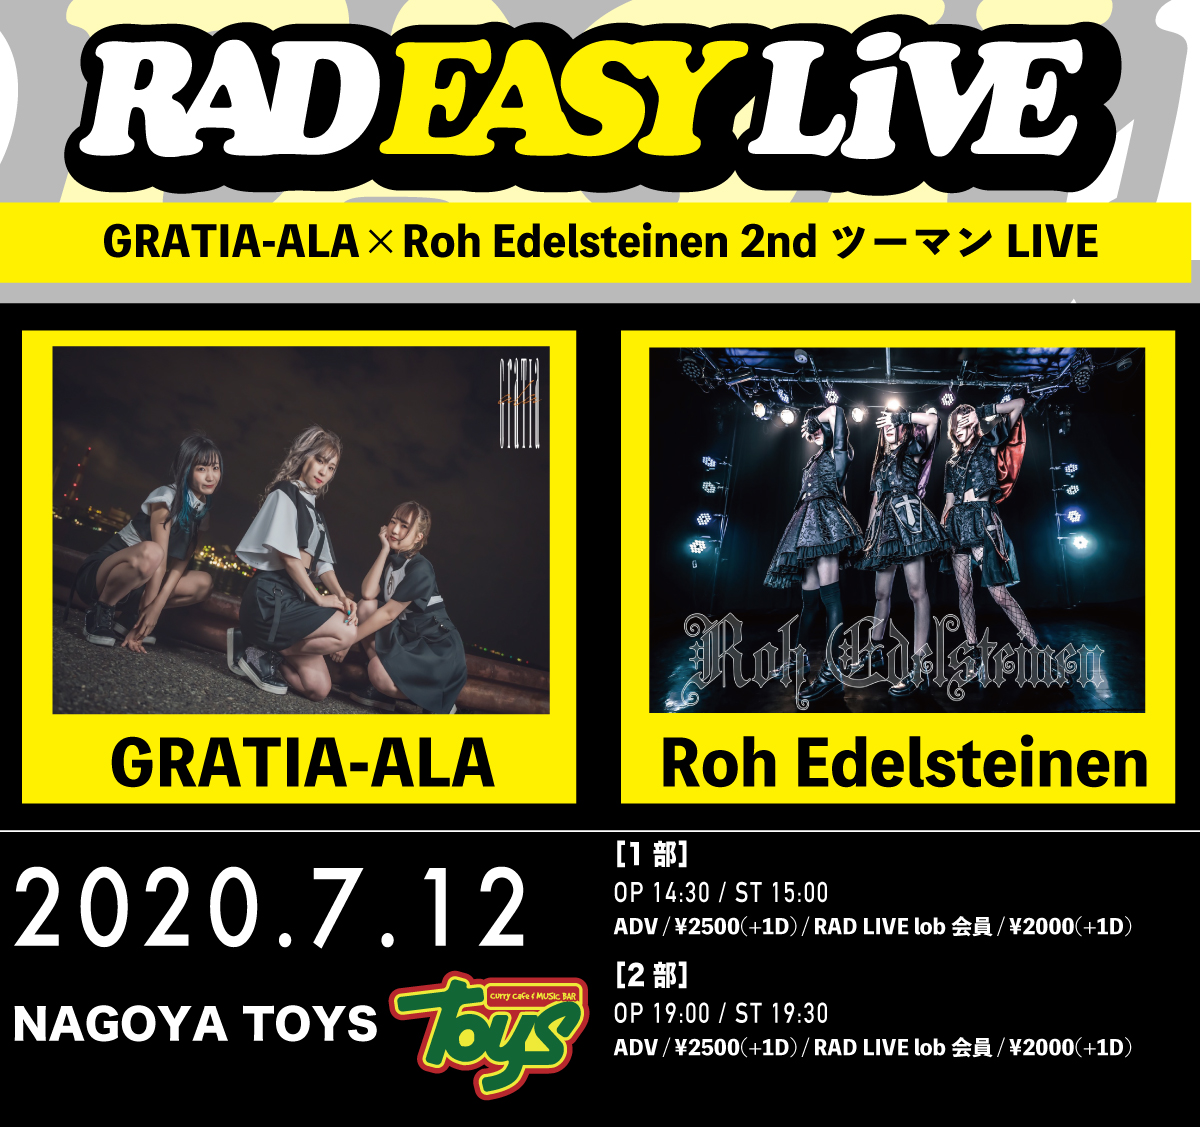 RAD EASY LIVE presents GRATIA-ALA×Roh Edelsteinen 2nd ツーマンLIVE